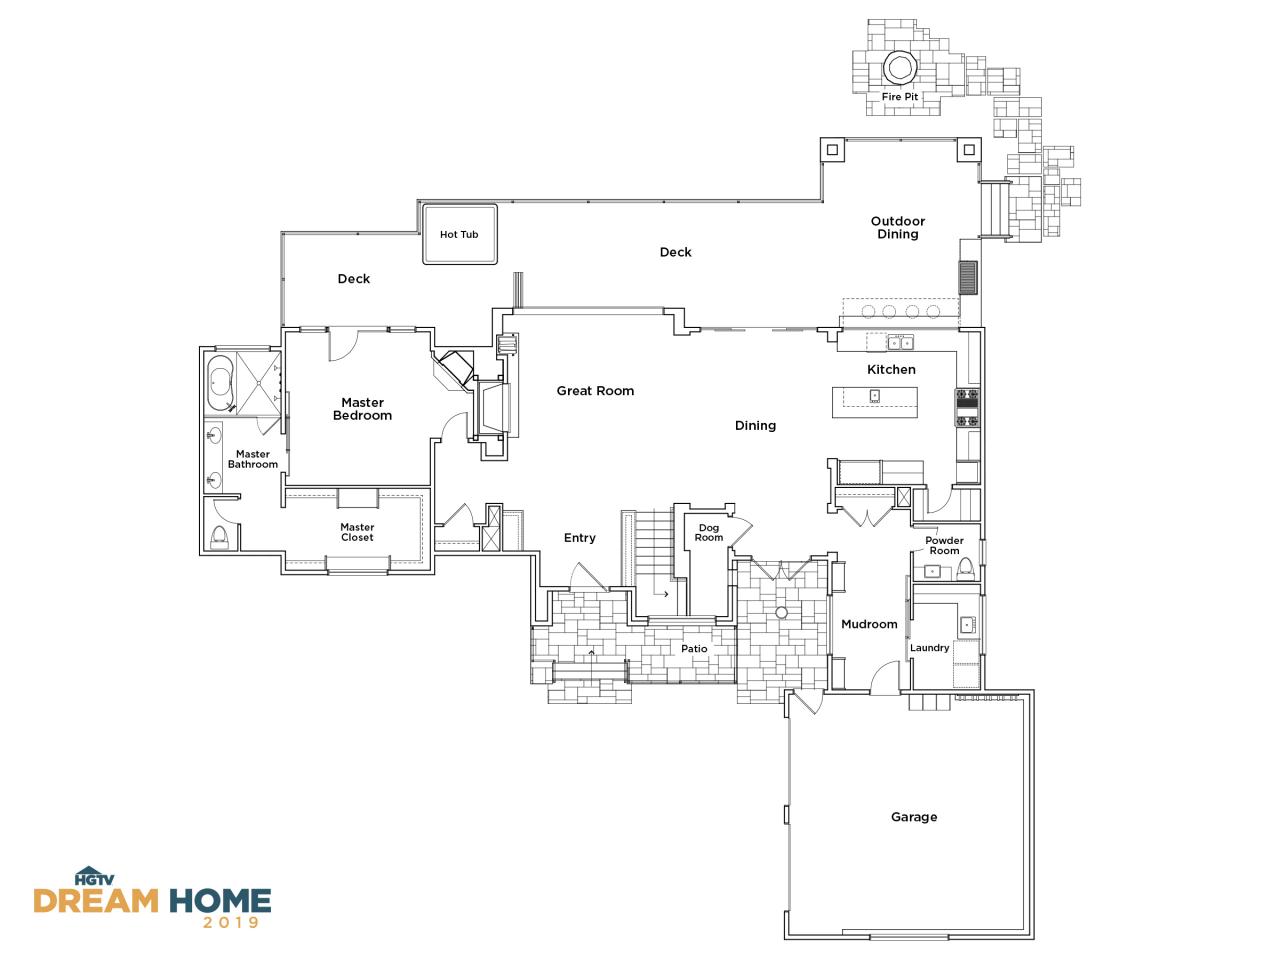 Discover the Floor Plan for HGTV Dream Home 2019 HGTV Dream Home 2019